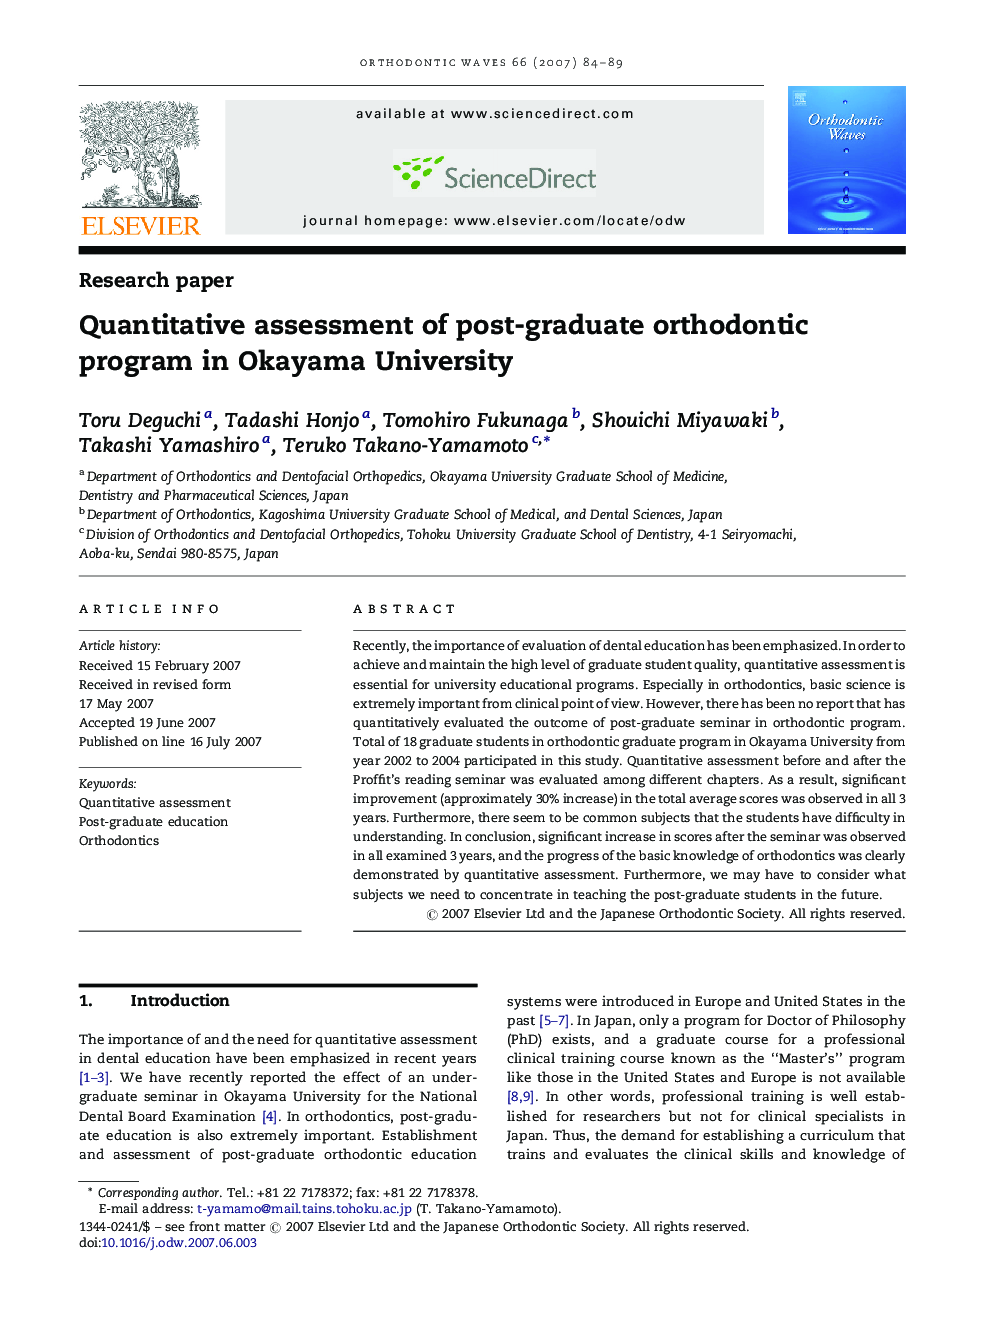 Quantitative assessment of post-graduate orthodontic program in Okayama University